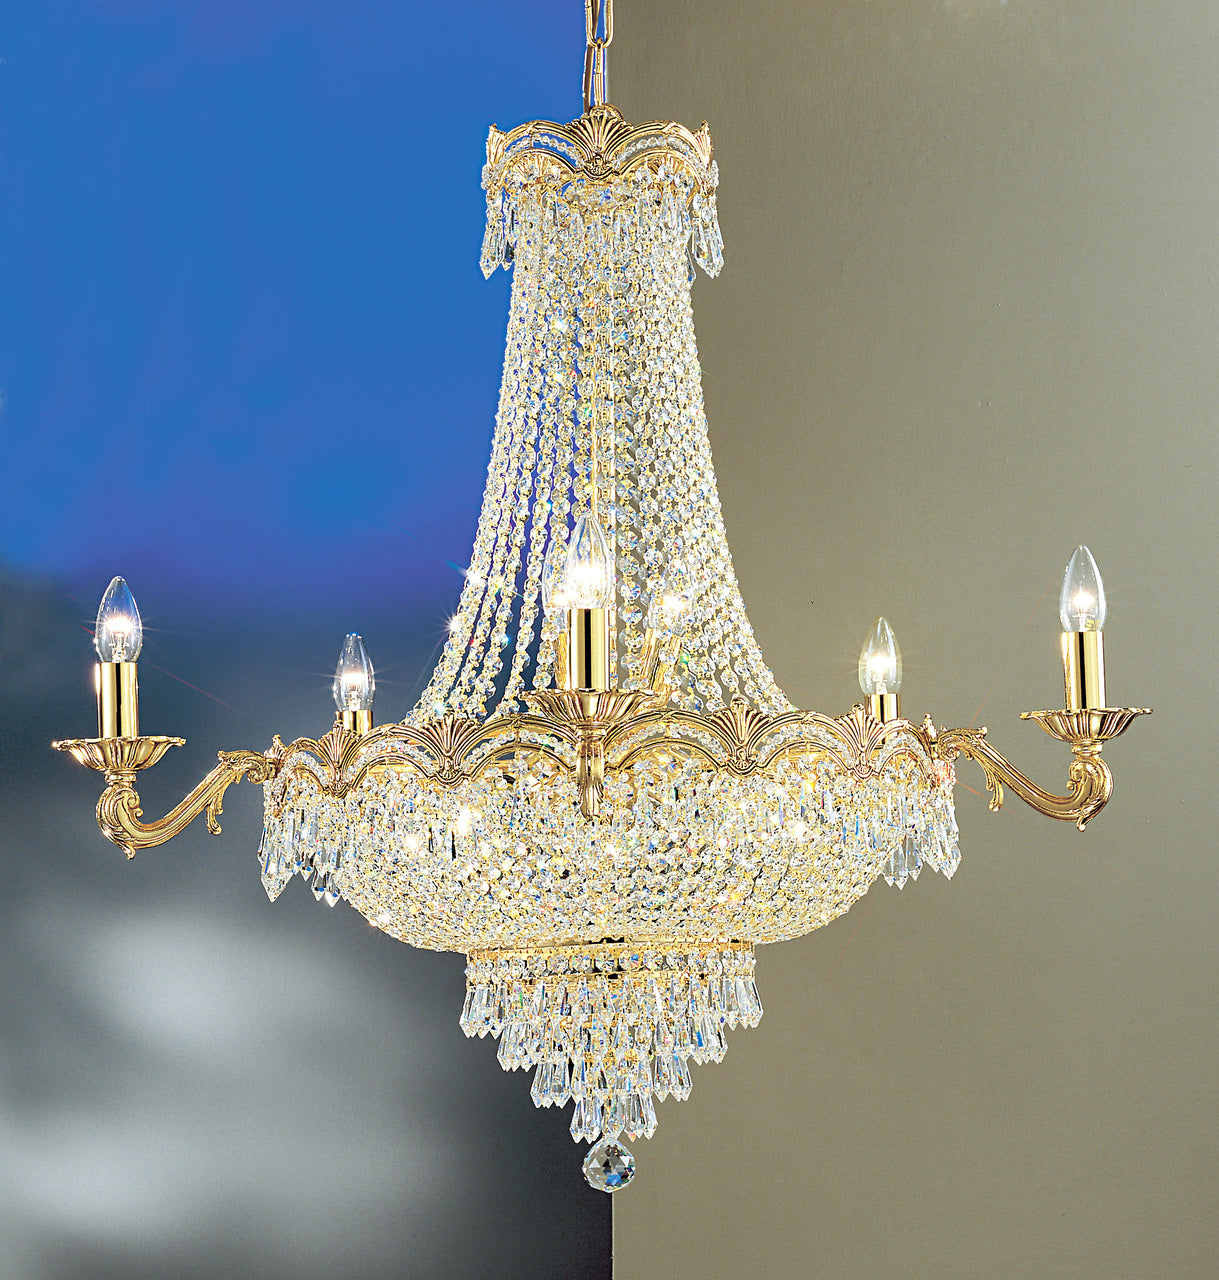 Classic Lighting 1859 G SC Regency II Crystal Chandelier in 24k Gold (Imported from Spain)